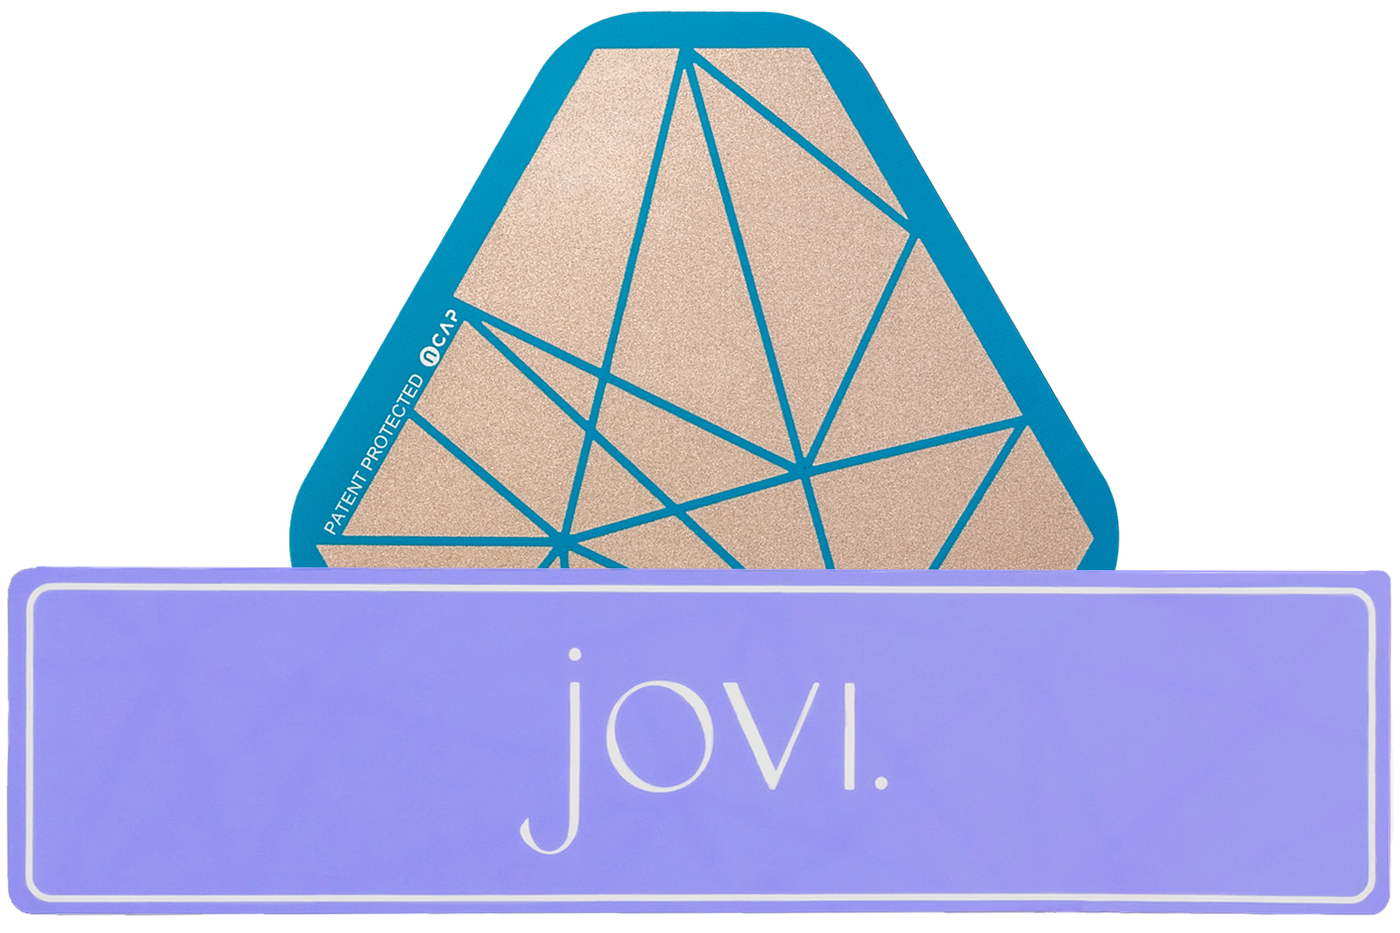 Jovi & Signal Combo JB